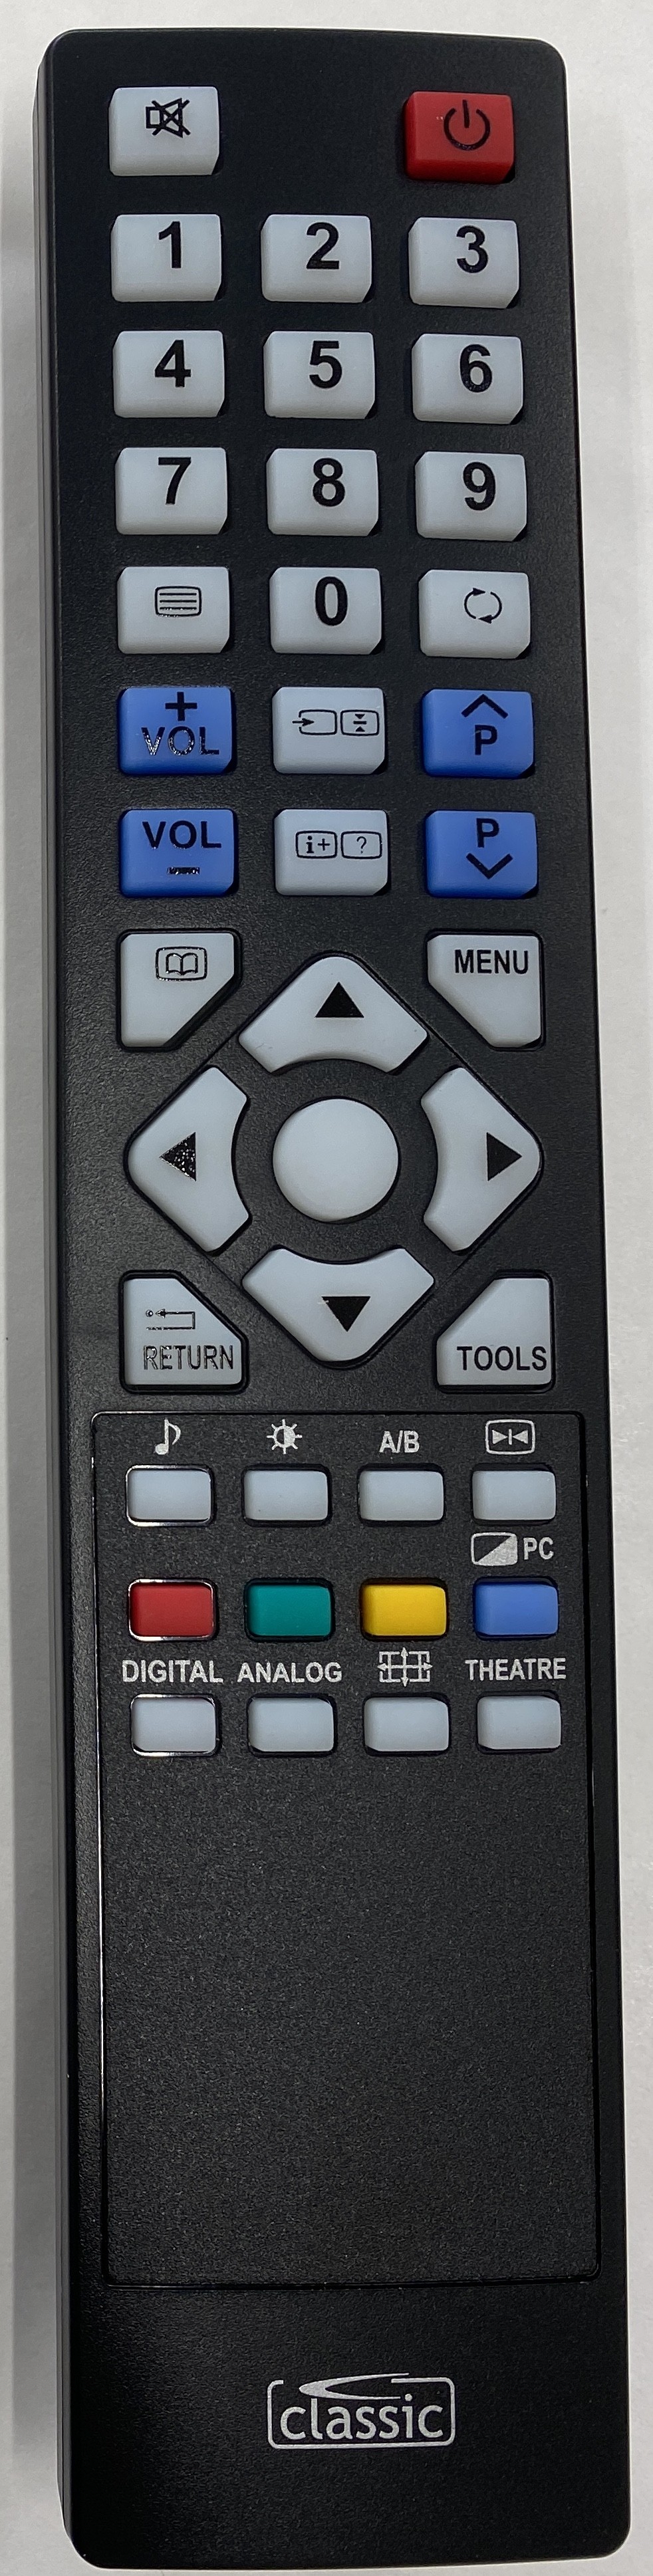 SONY RM-ED009 Remote Control Alternative